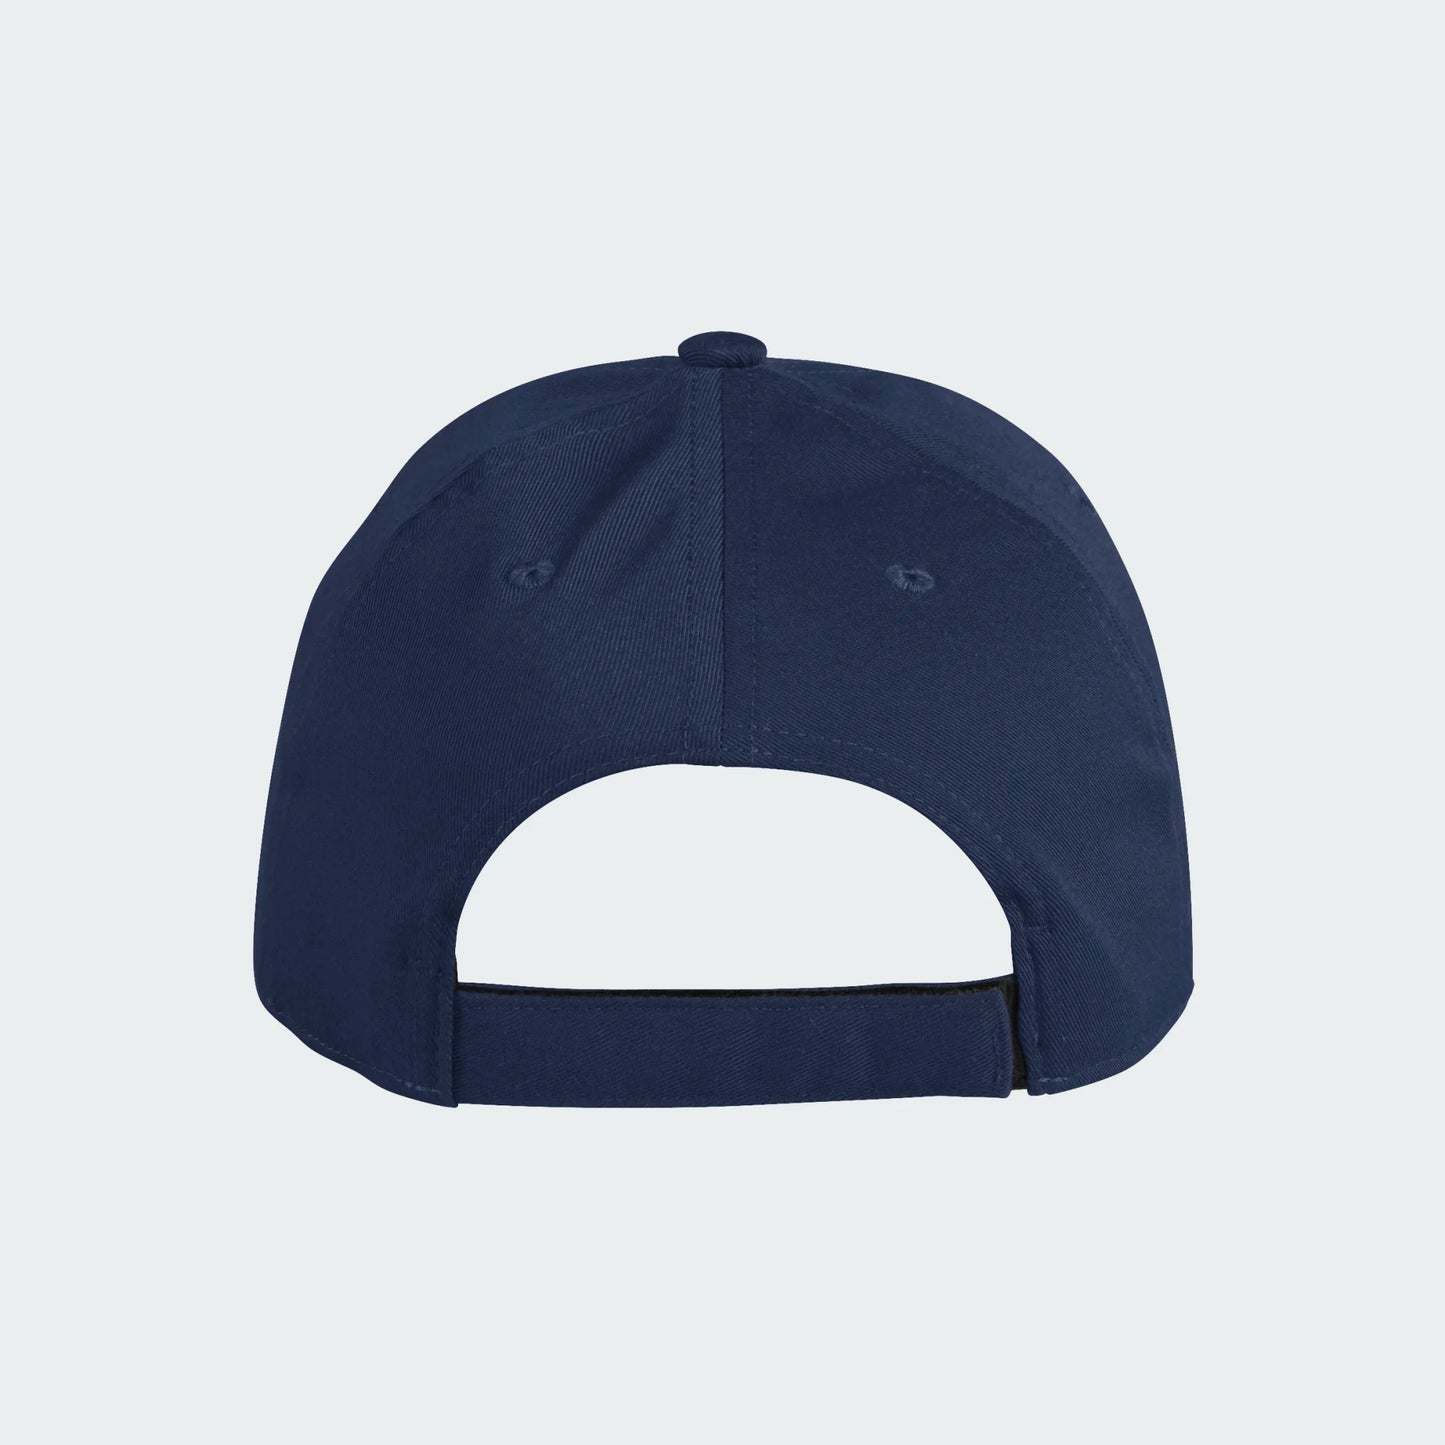 Adidas Men's Navy New York Rangers Locker Room Three Stripe Adjustable Hat